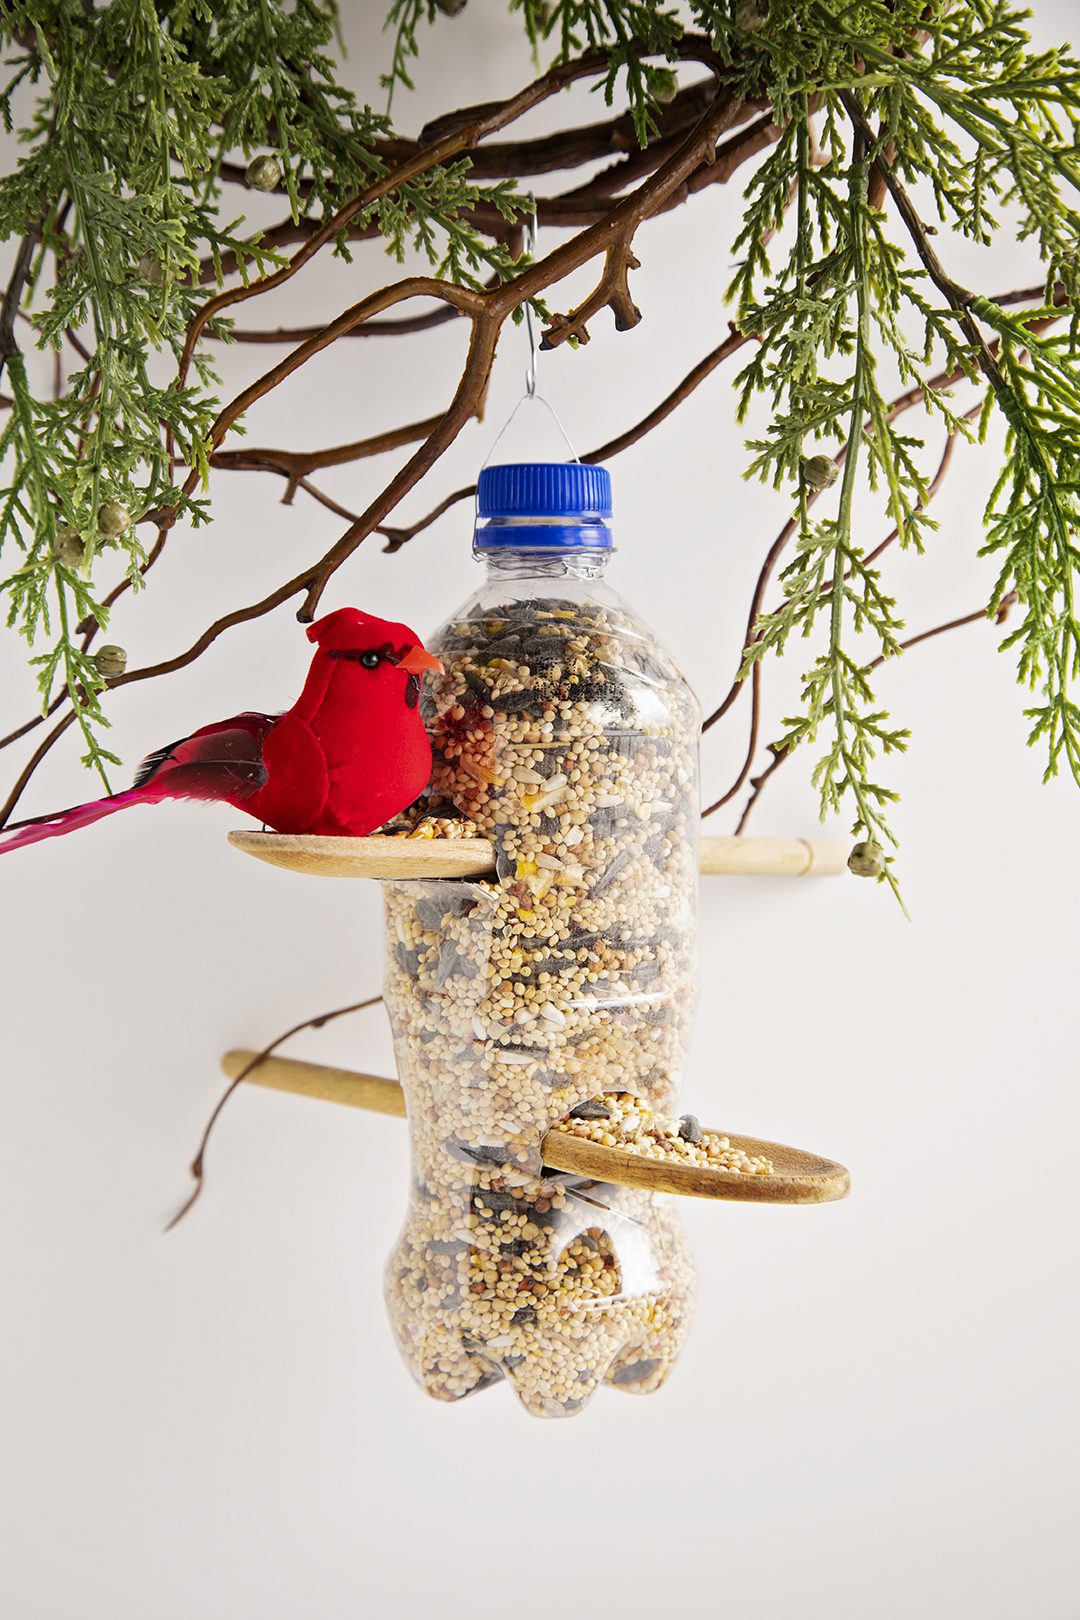 https://welcometonanas.com/wp-content/uploads/2020/11/Welcome-to-Nanas-DIY-How-To-Make-Recycled-Plastic-Bottle-Bird-Feeder-Tutorial-Kids-Craft-Nature-Education-5.jpg